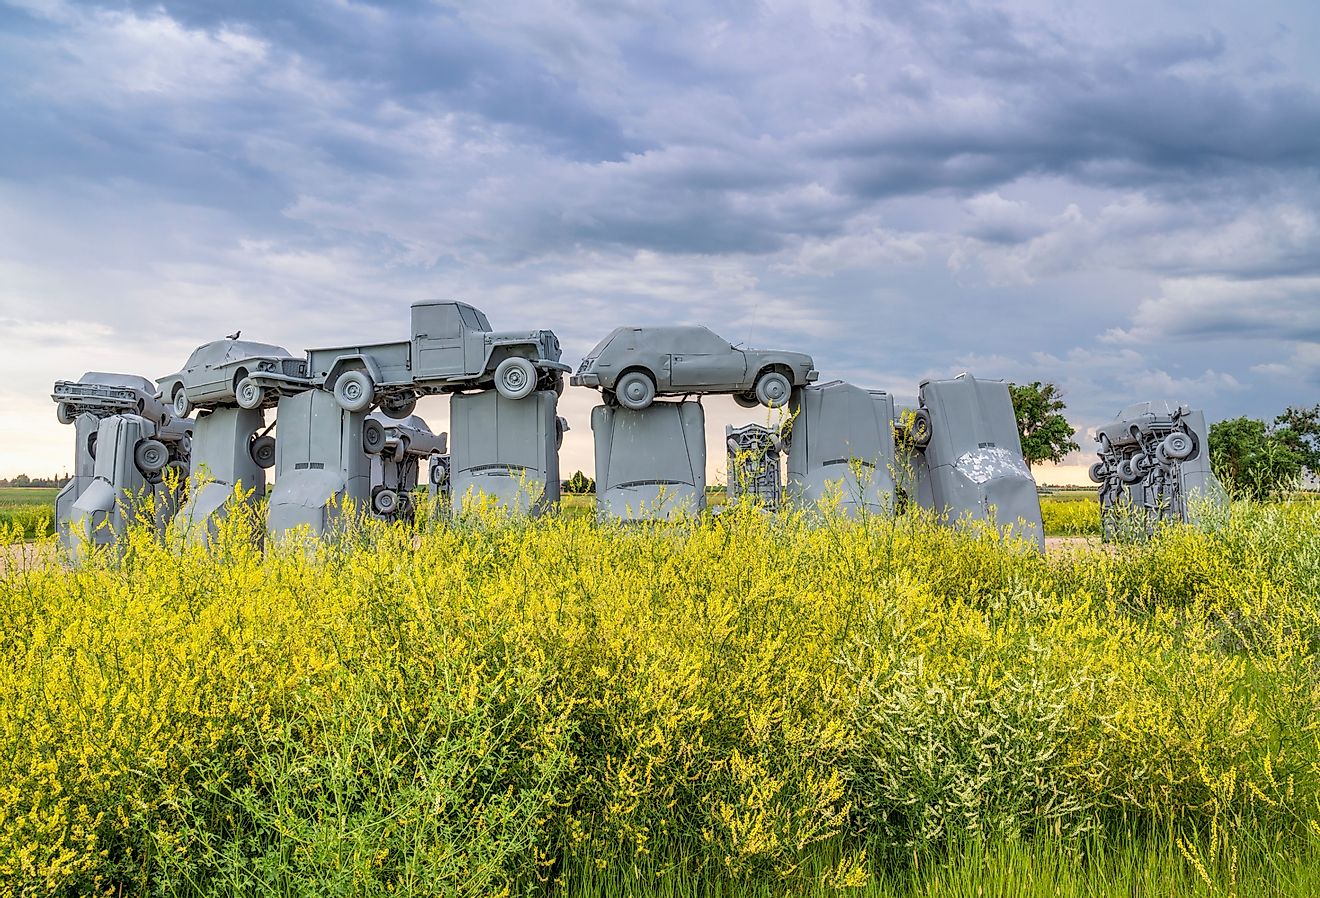 View of "Carhenge", an homage to England's Stonehenge in Alliance, Nebraska. Image credit marekuliasz via Shutterstock.